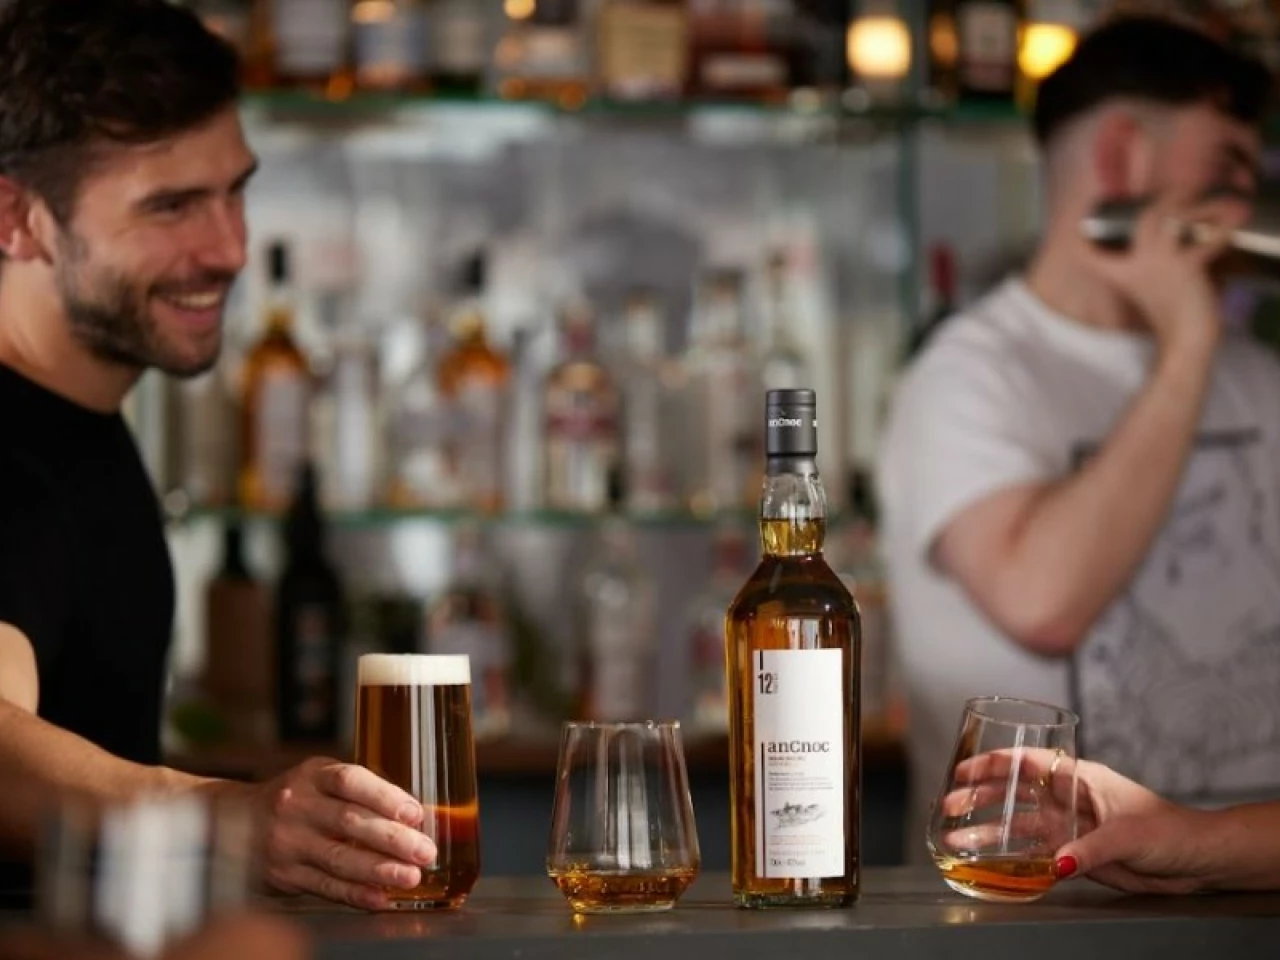 anCnoc Single Malt Scotch Whisky being enjoyed at a bar